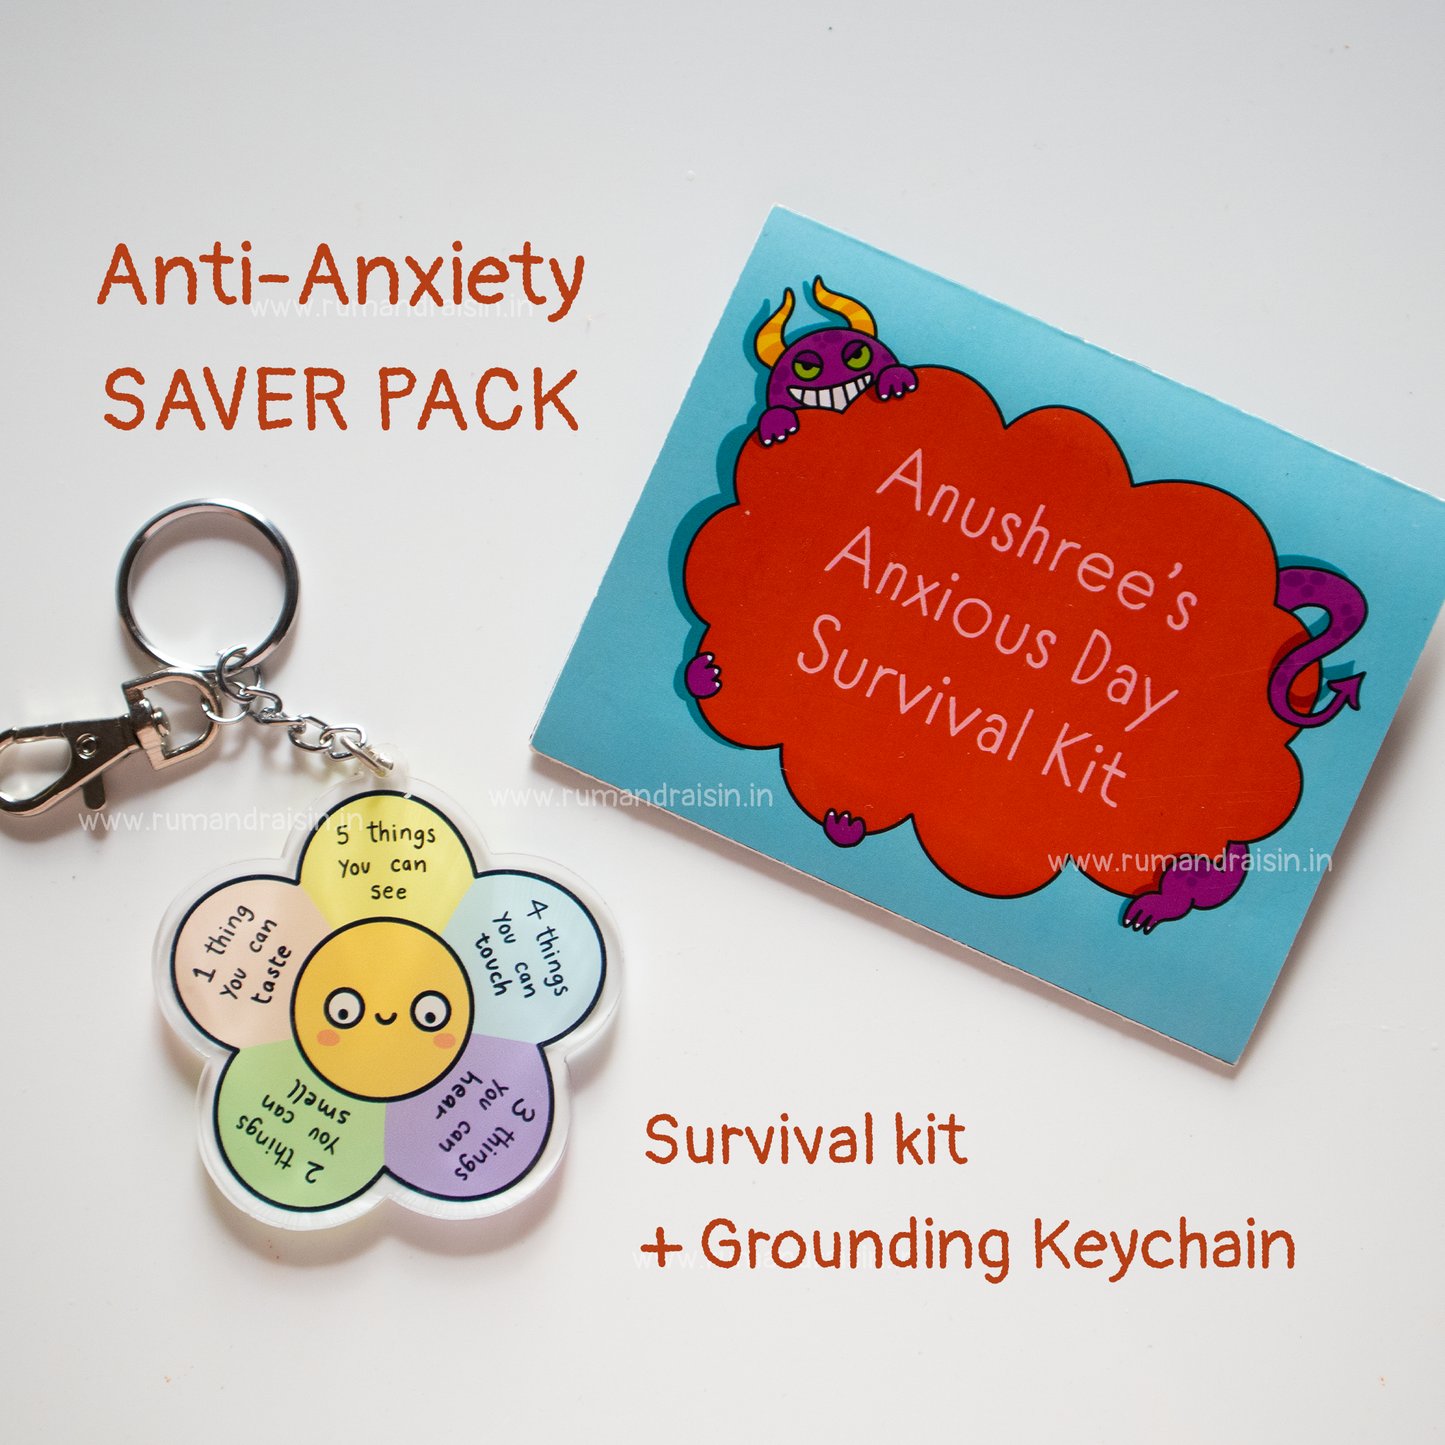 Anti-Anxiety: SAVER PACK